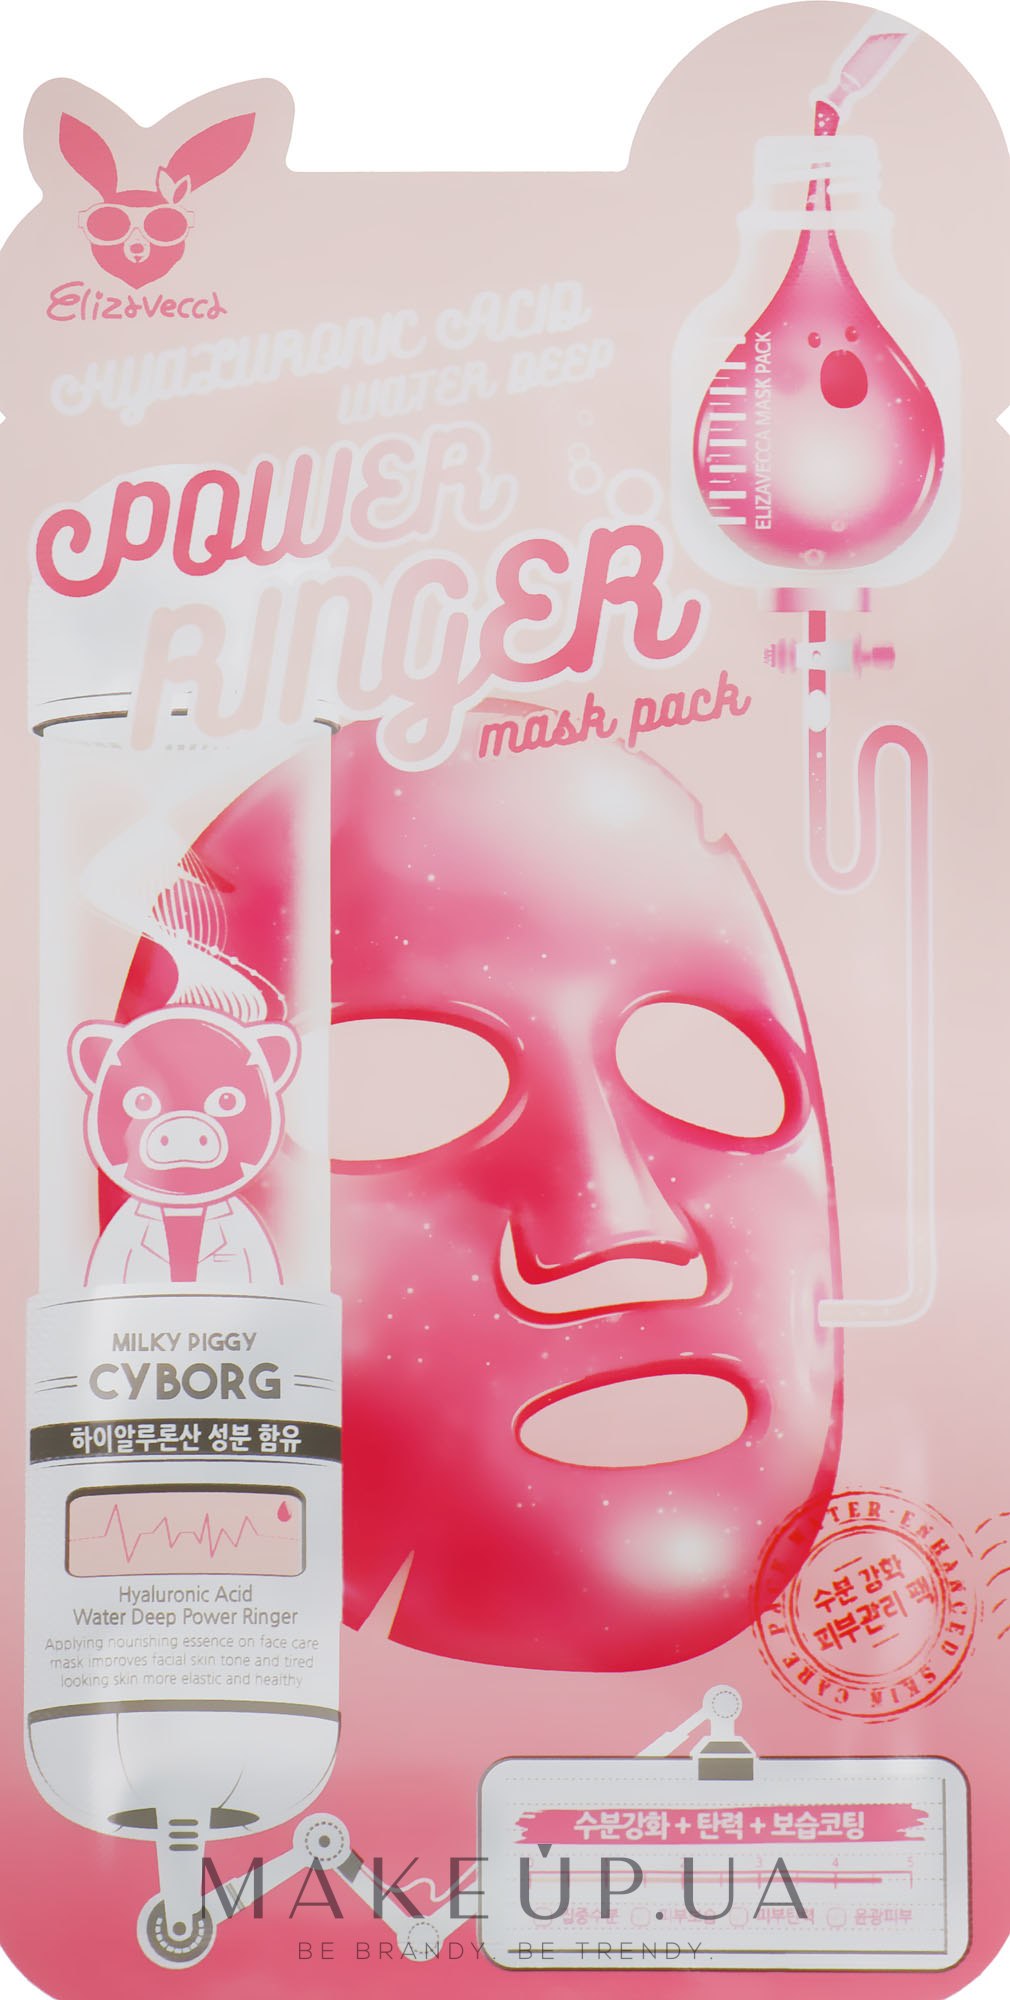 Увлажняющая тканевая маска с гиалуроновой кислотой - Elizavecca Hyaluronic Acid Water Deep Power Ringer Mask Pack — фото 23ml